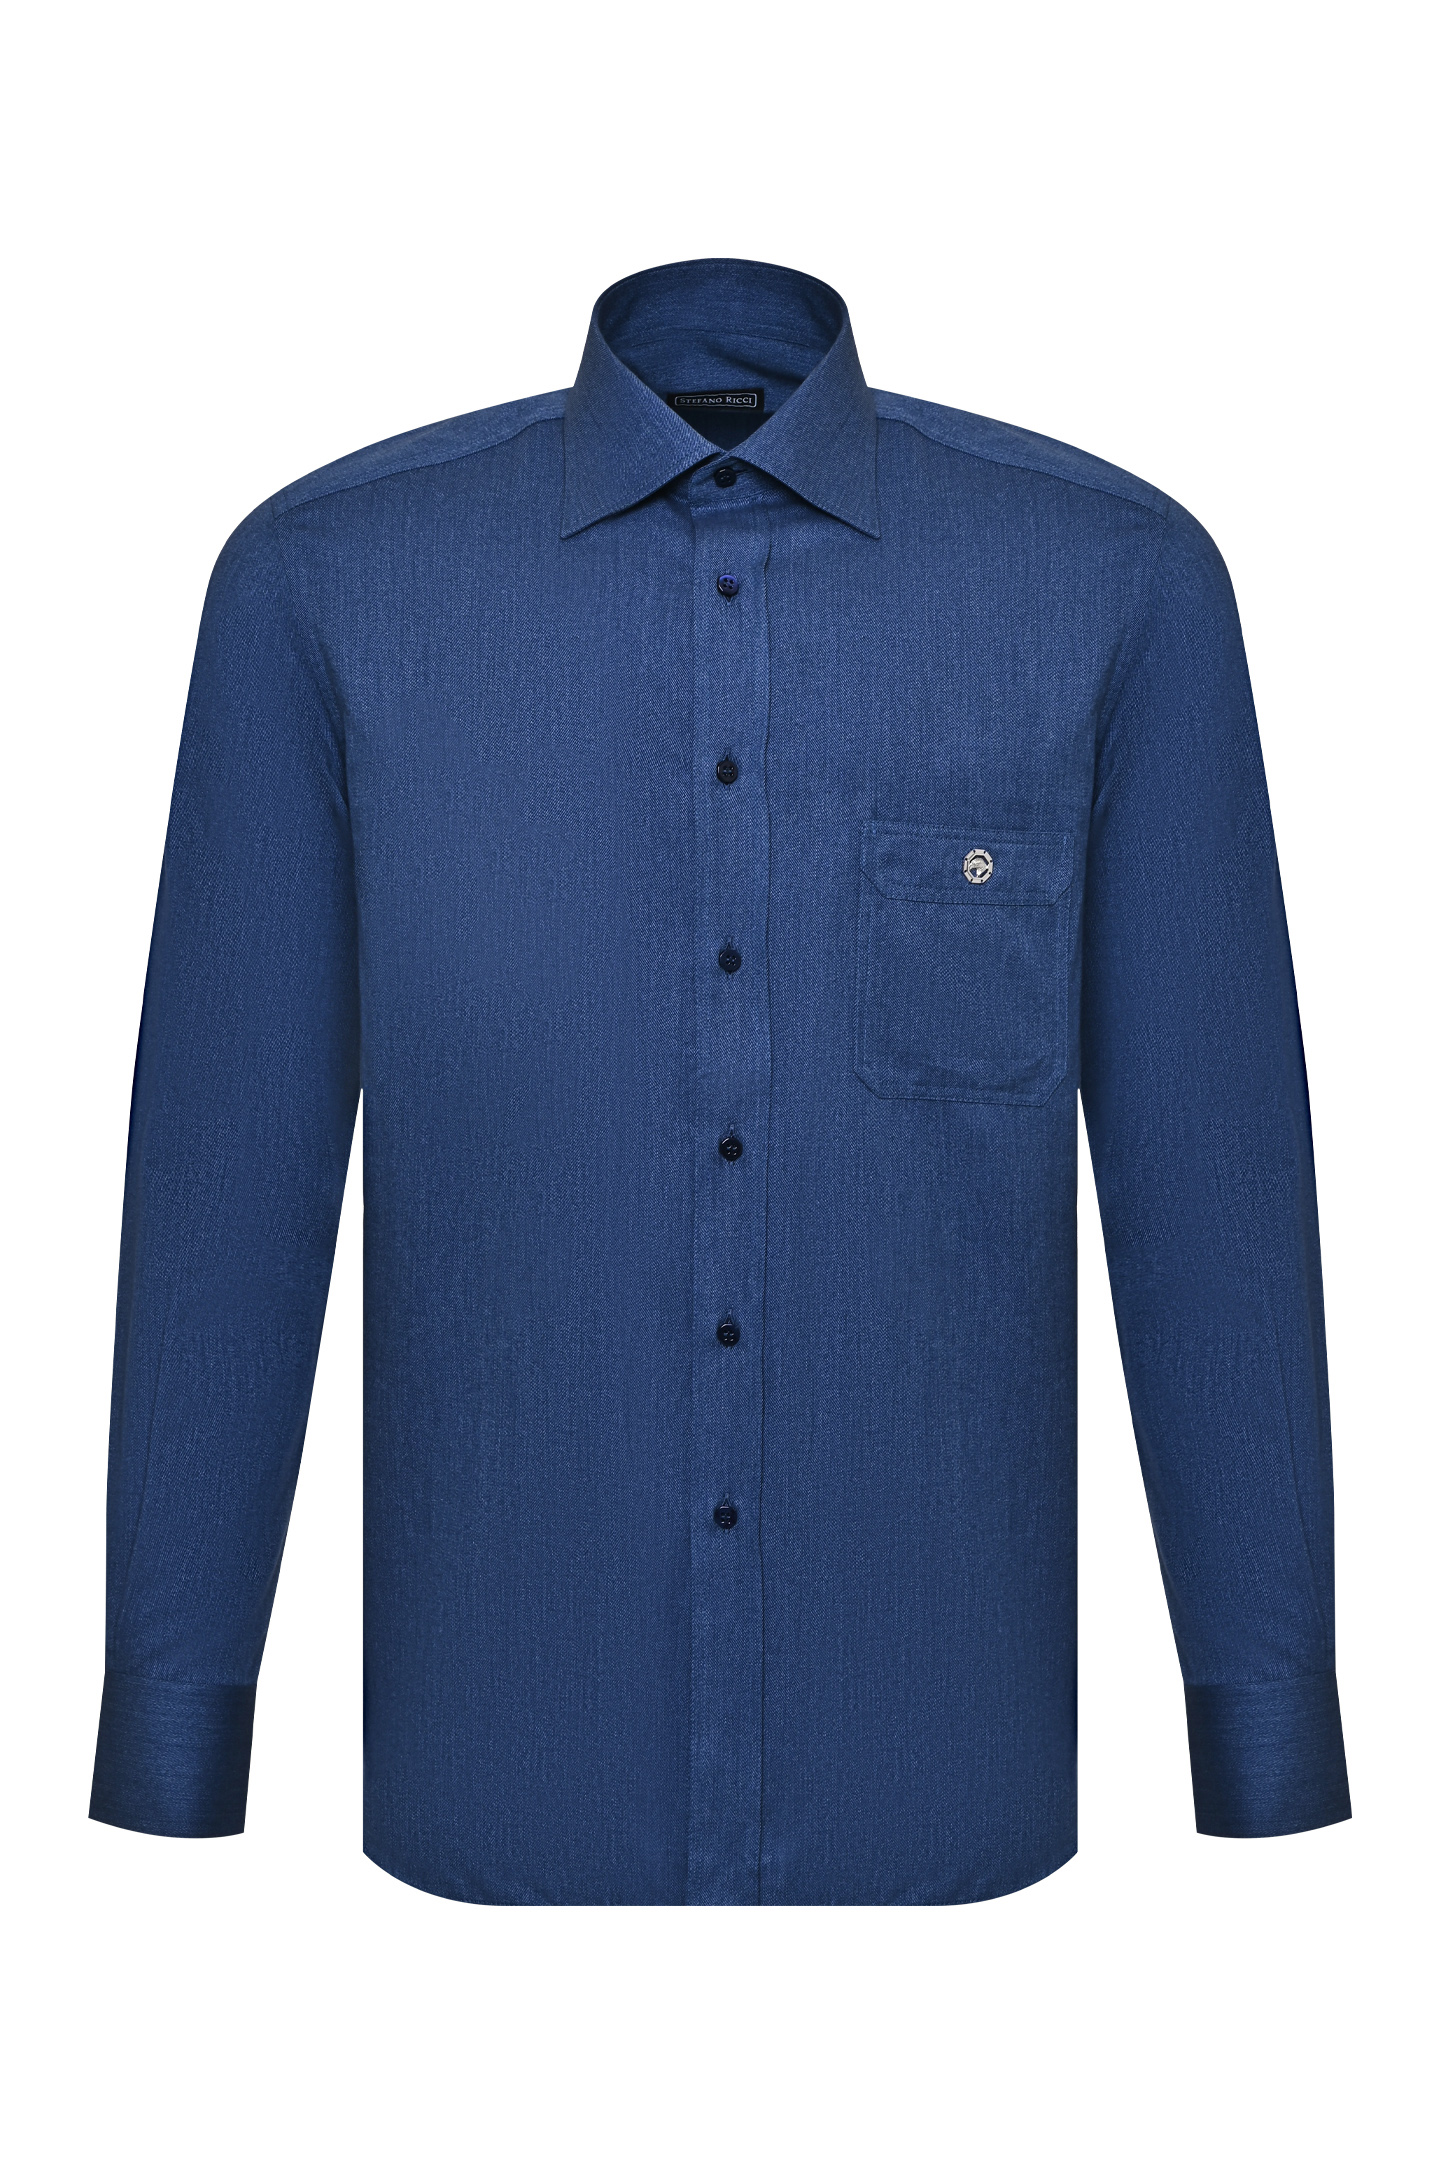 Рубашка STEFANO RICCI MC006475 R2461, цвет: Синий, Мужской